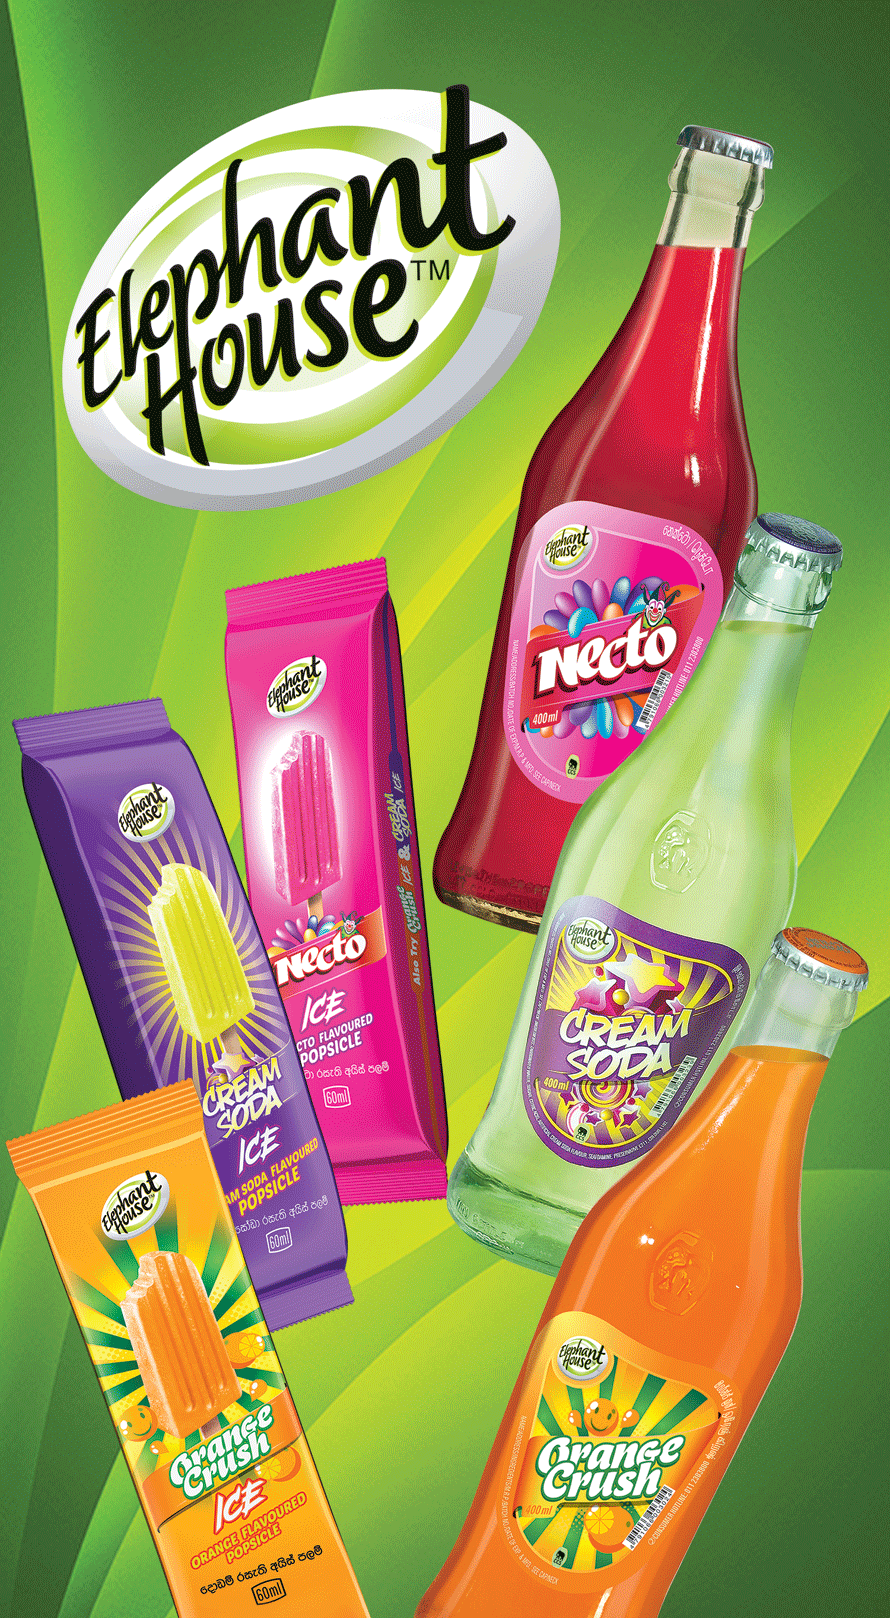 Sri Lanka s Much Loved and Iconic Beverage Brands Cream Soda Necto Orange Crush Launch Novel Frozen Treats